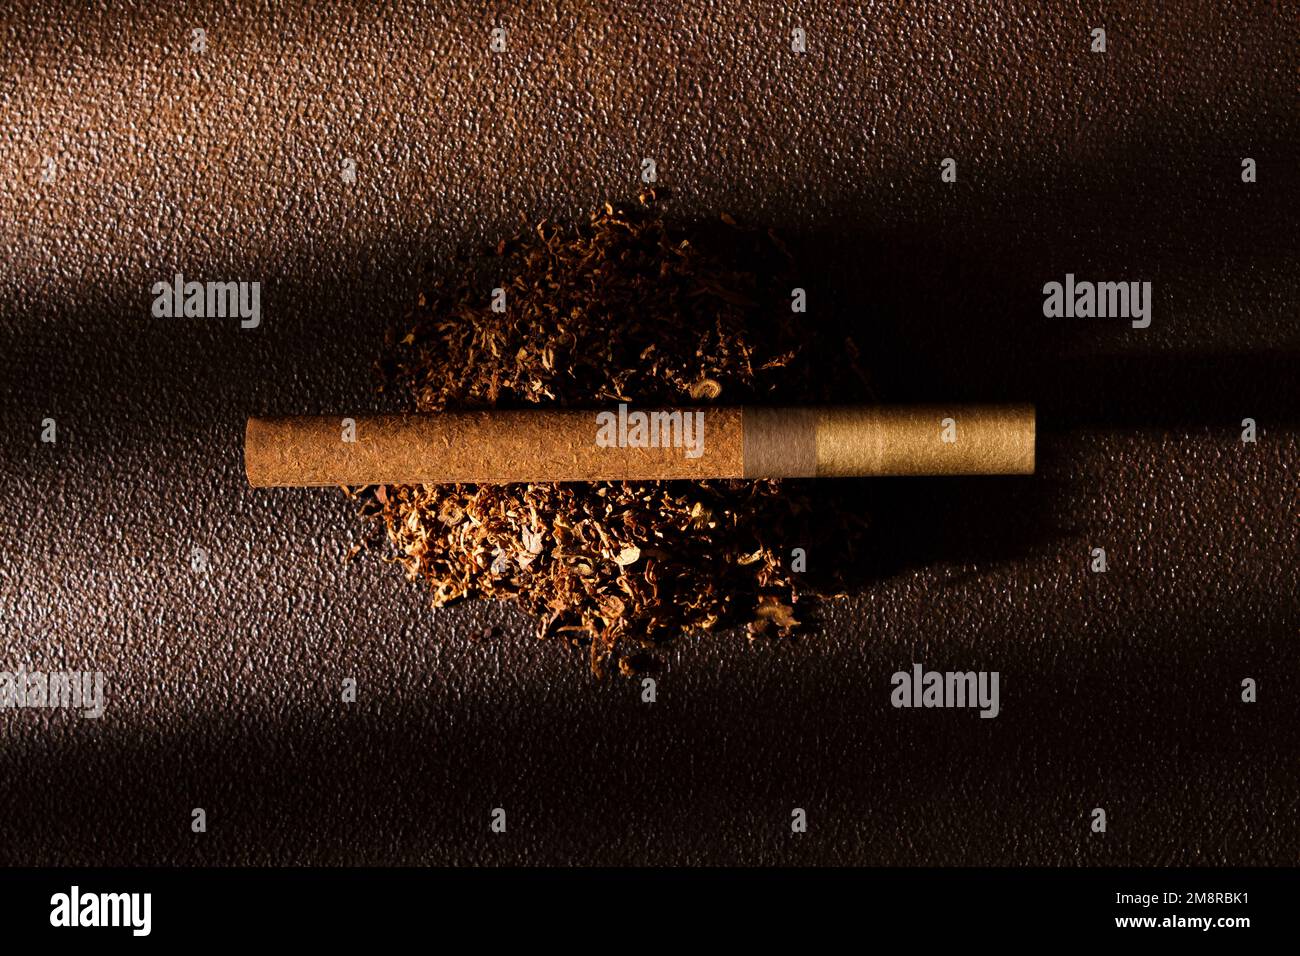 Cigarette. Cigarette and tobacco leaves close-up. Selective focus. Bad habits Stock Photo